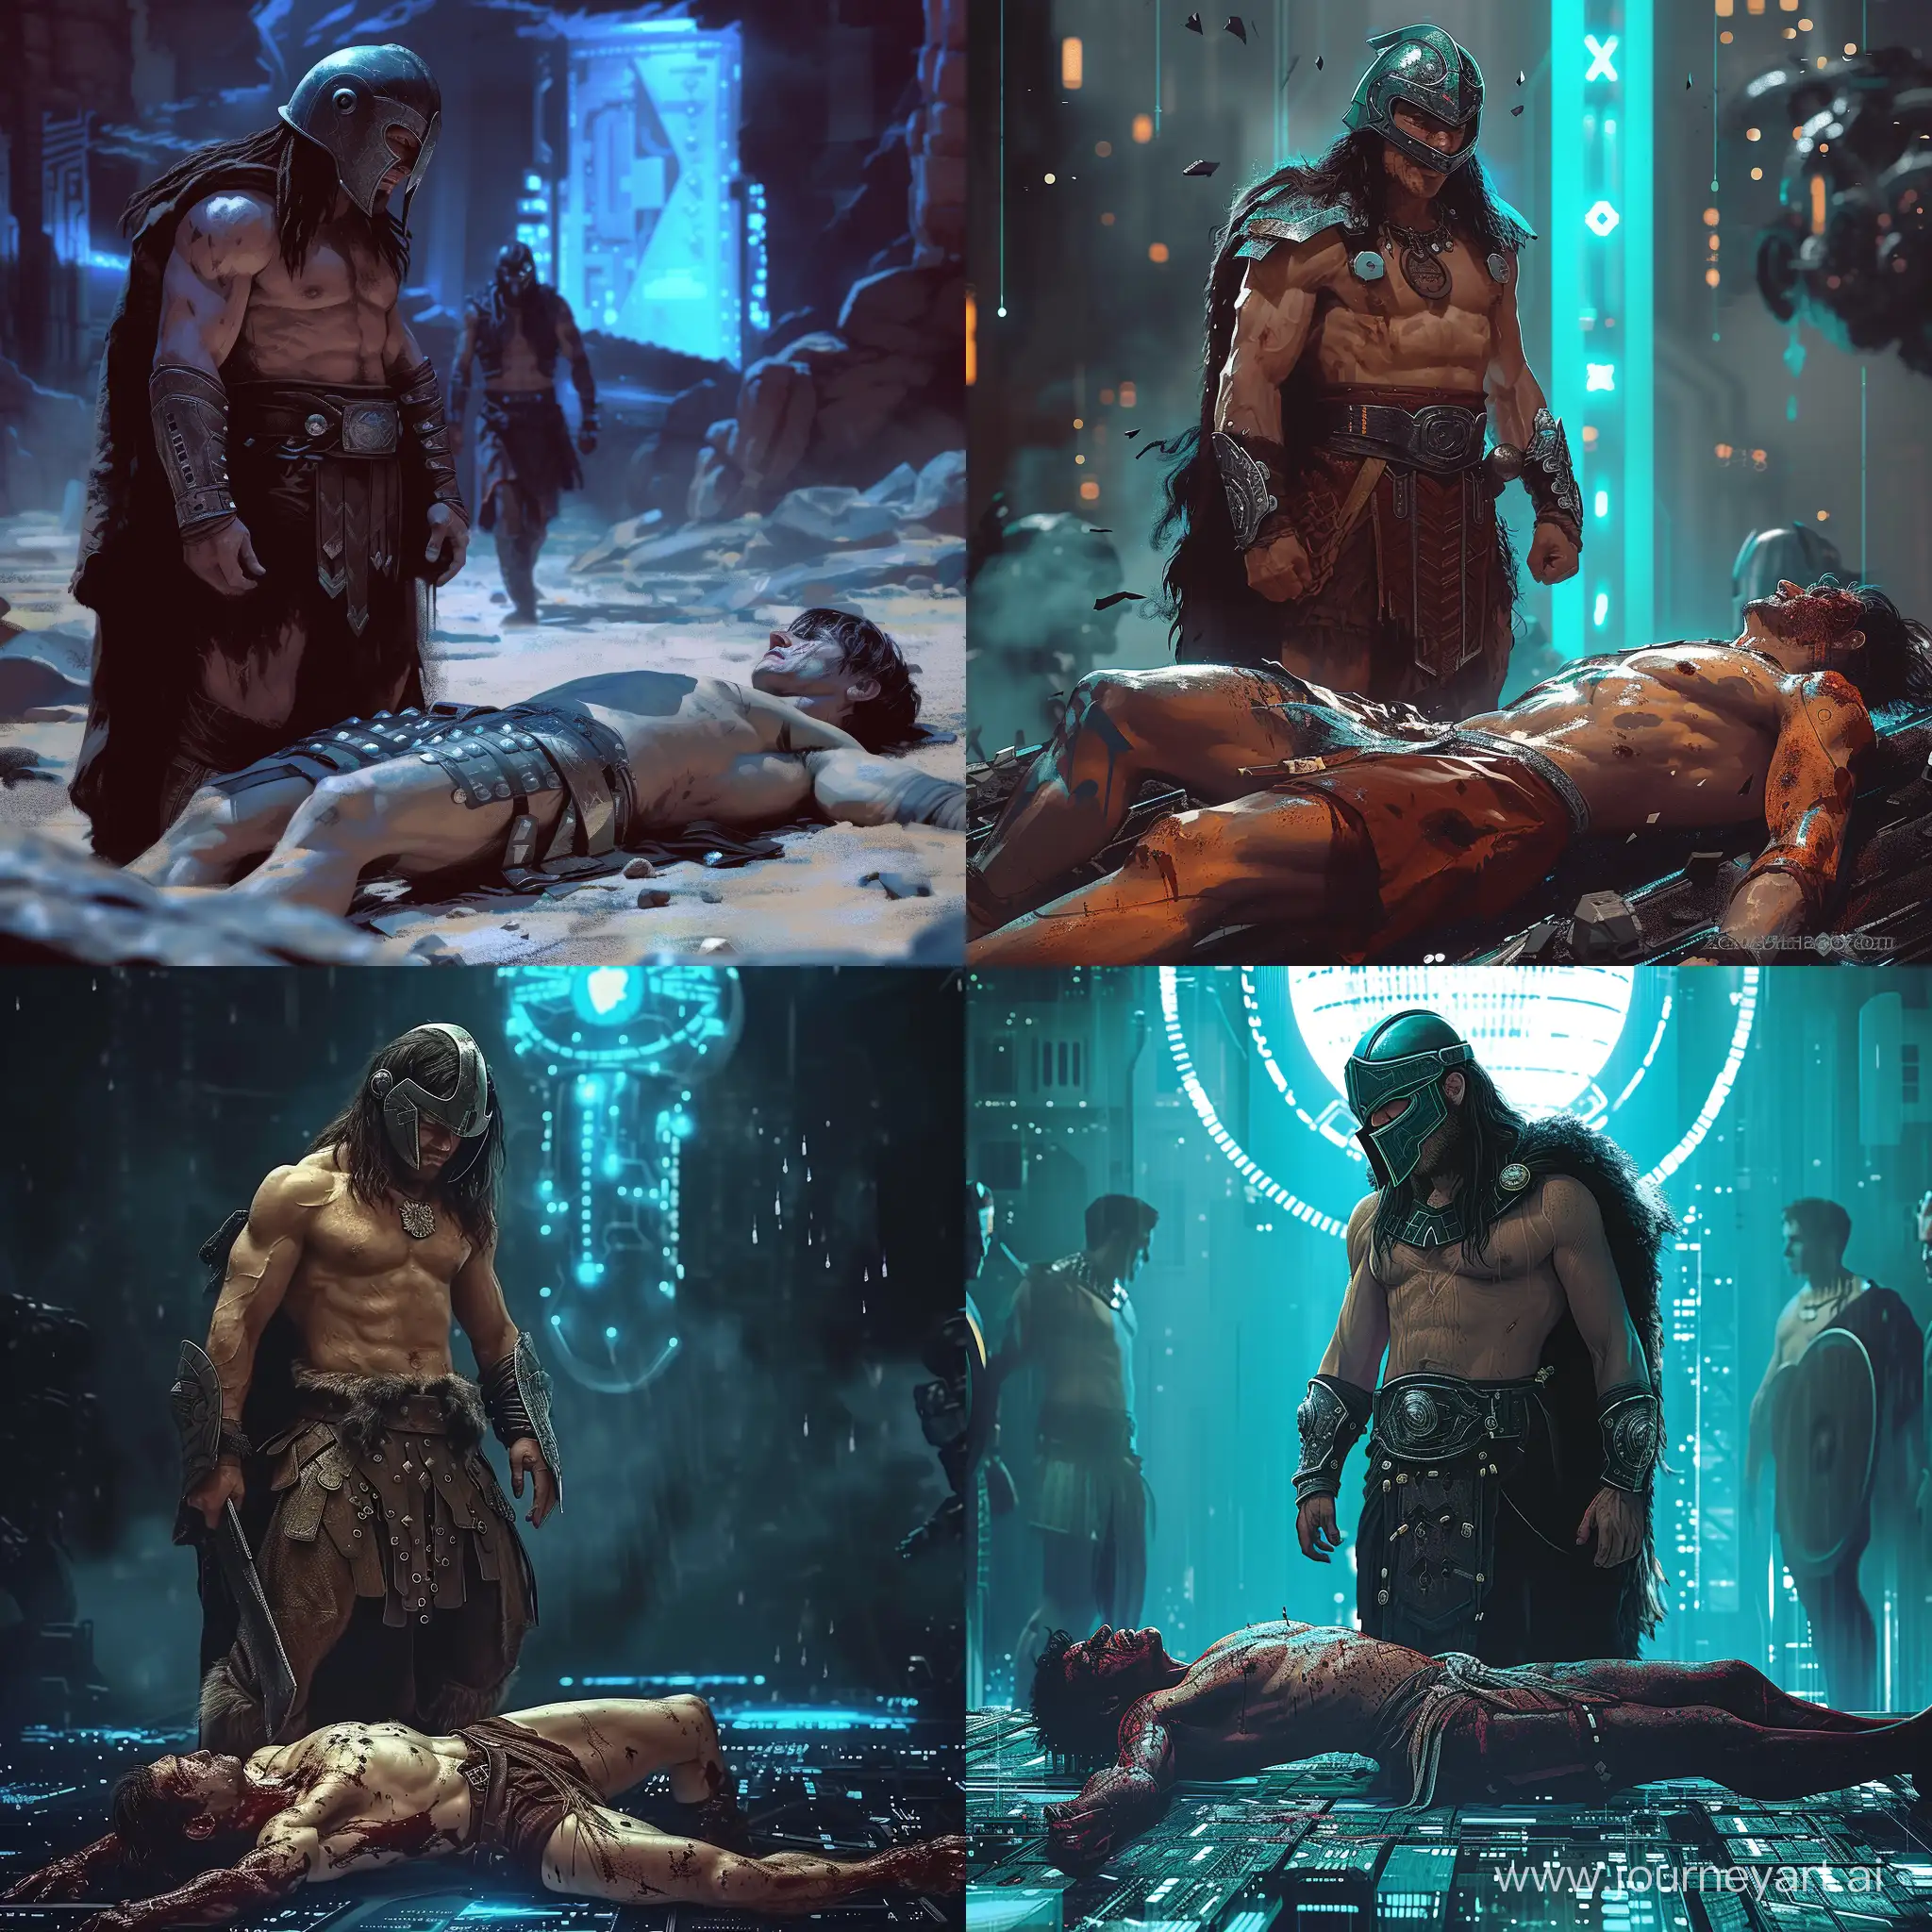 Conan the Barbarian in visor helmet standing on the defeated body of cyberpunk Vitalik Buterin.